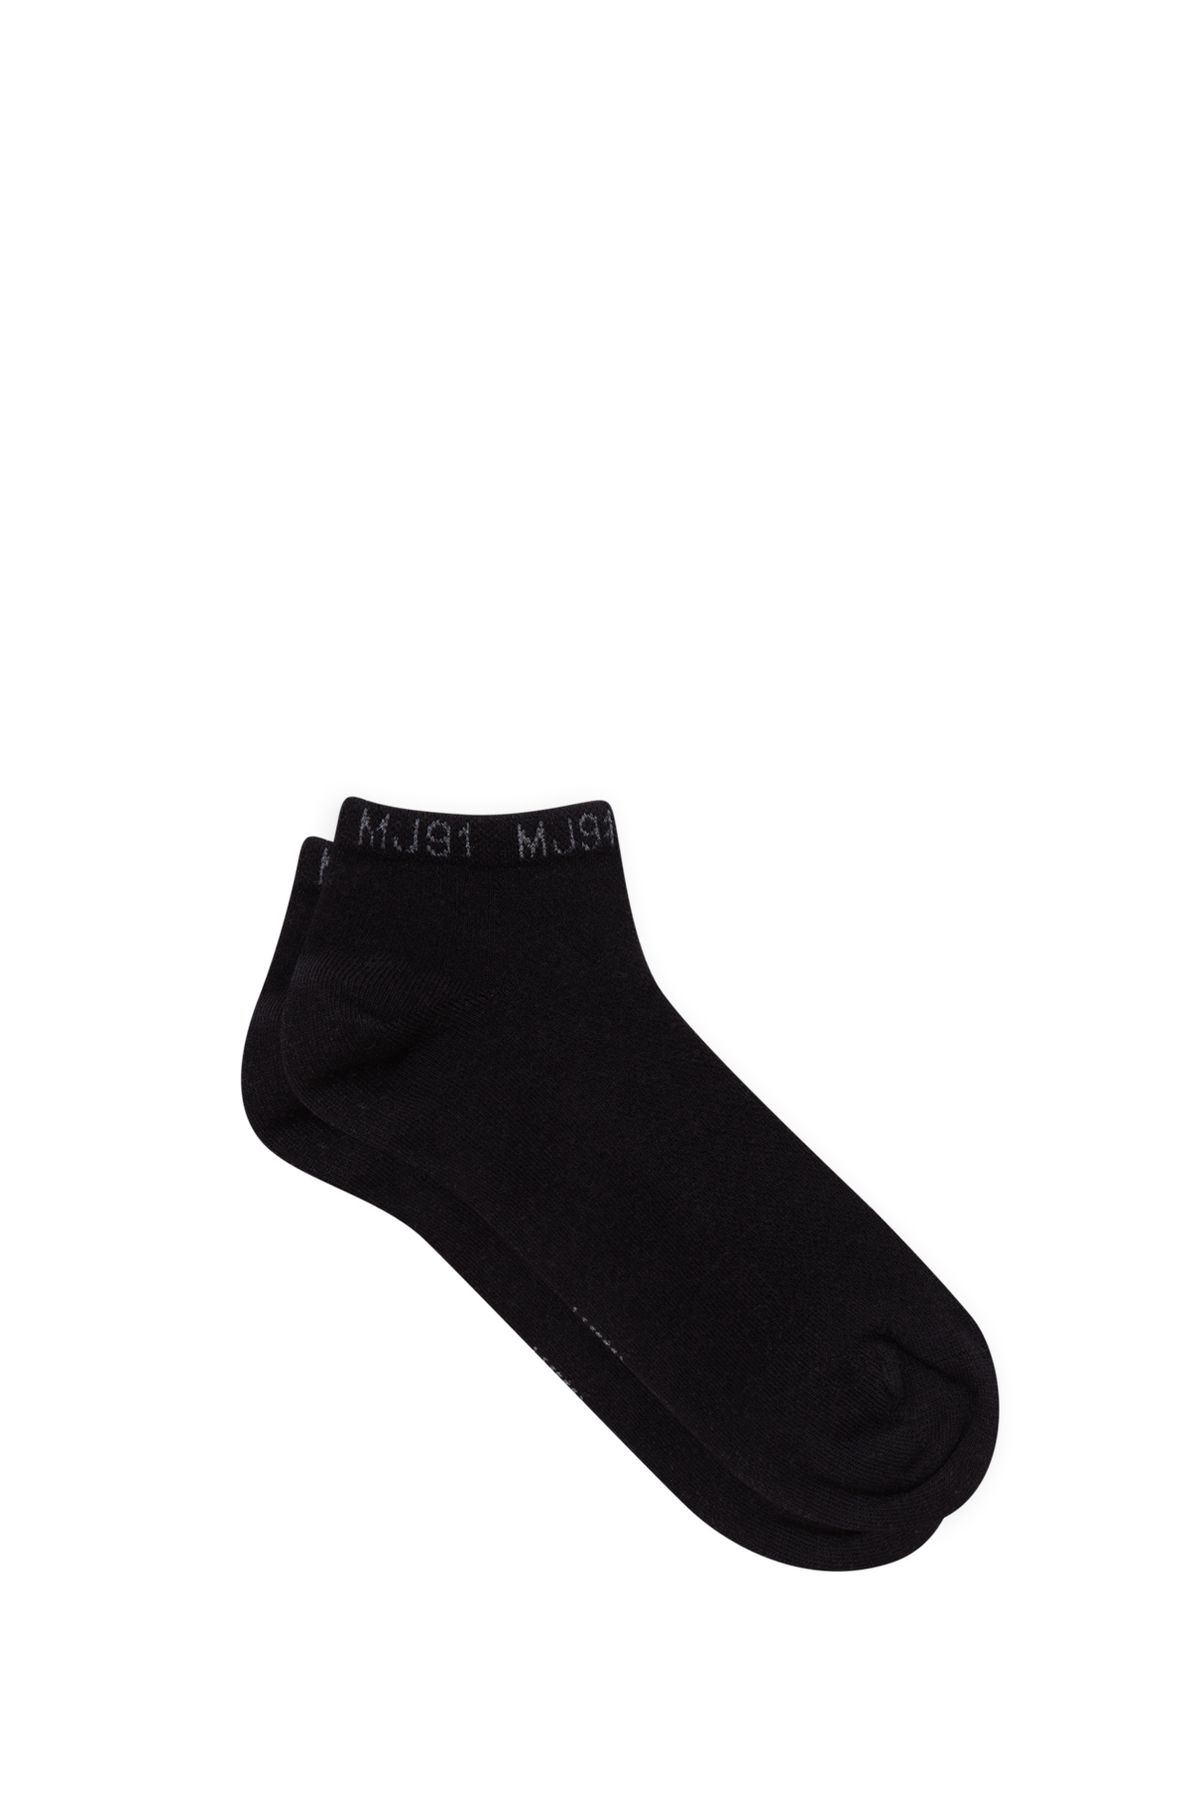 Mavi Siyah Patik Çorap 092286-900